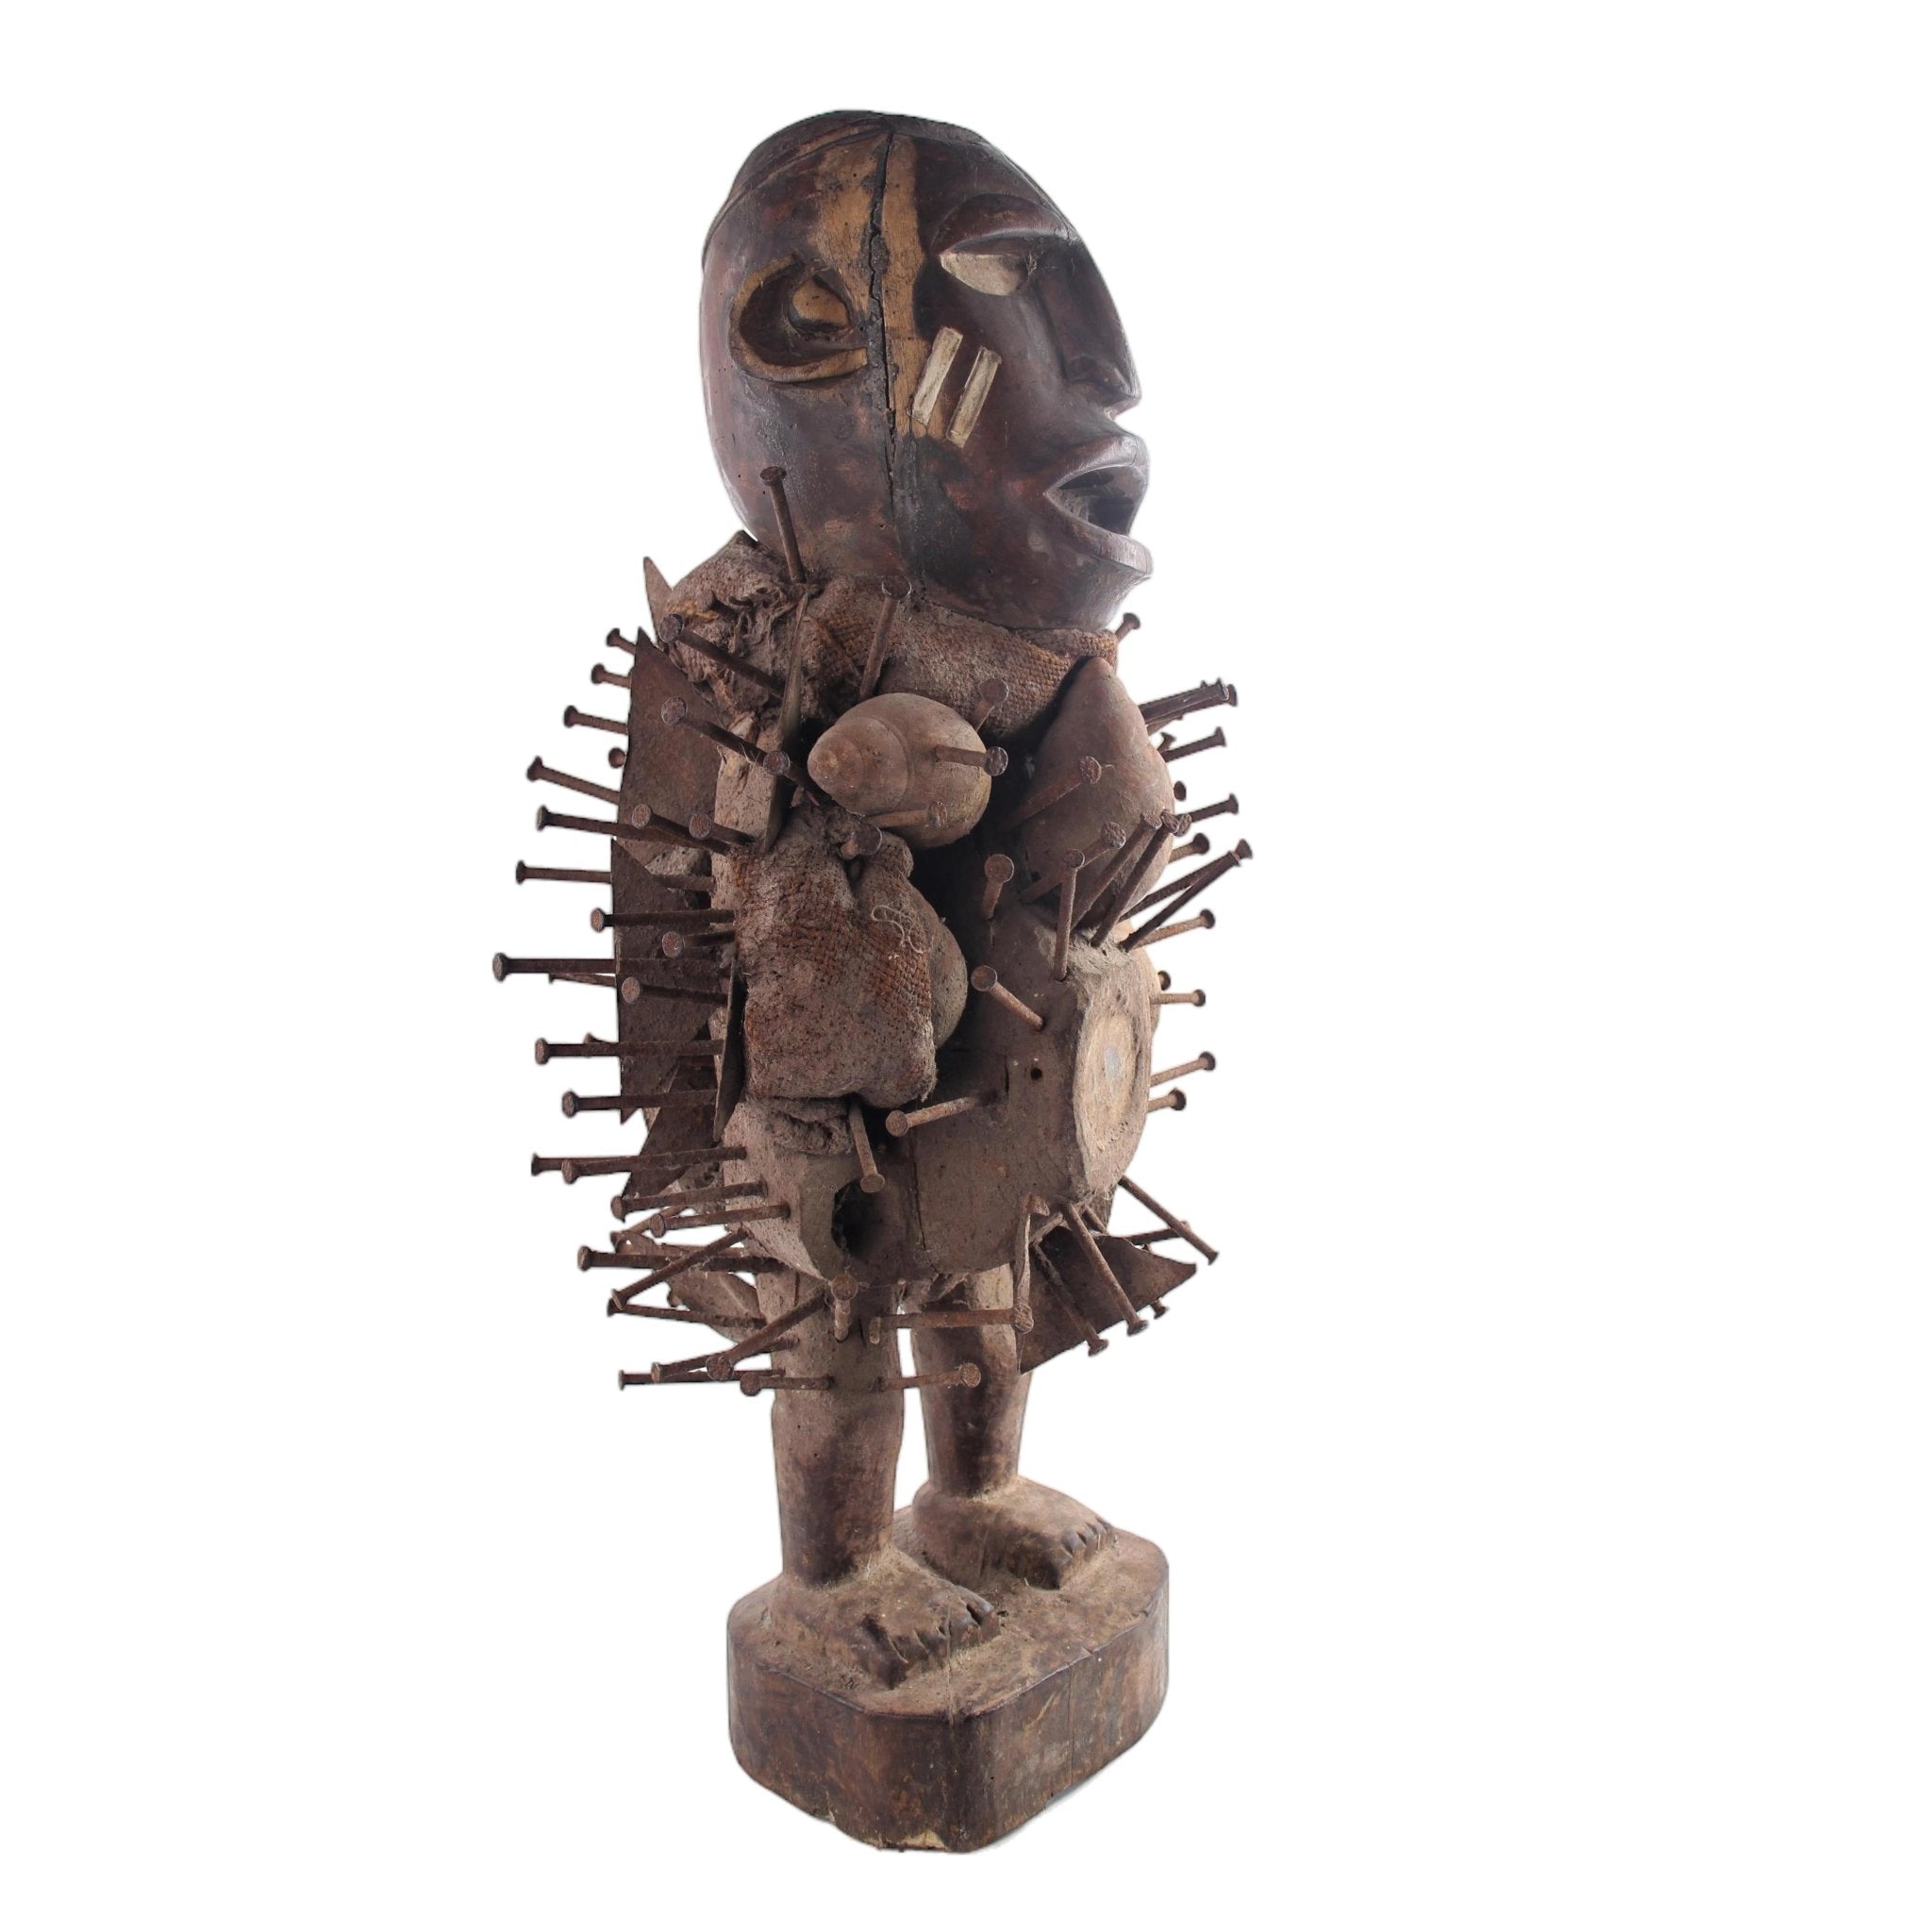 Bakongo Tribe Fetishes ~25.6" Tall - African Angel Art - Fetishes